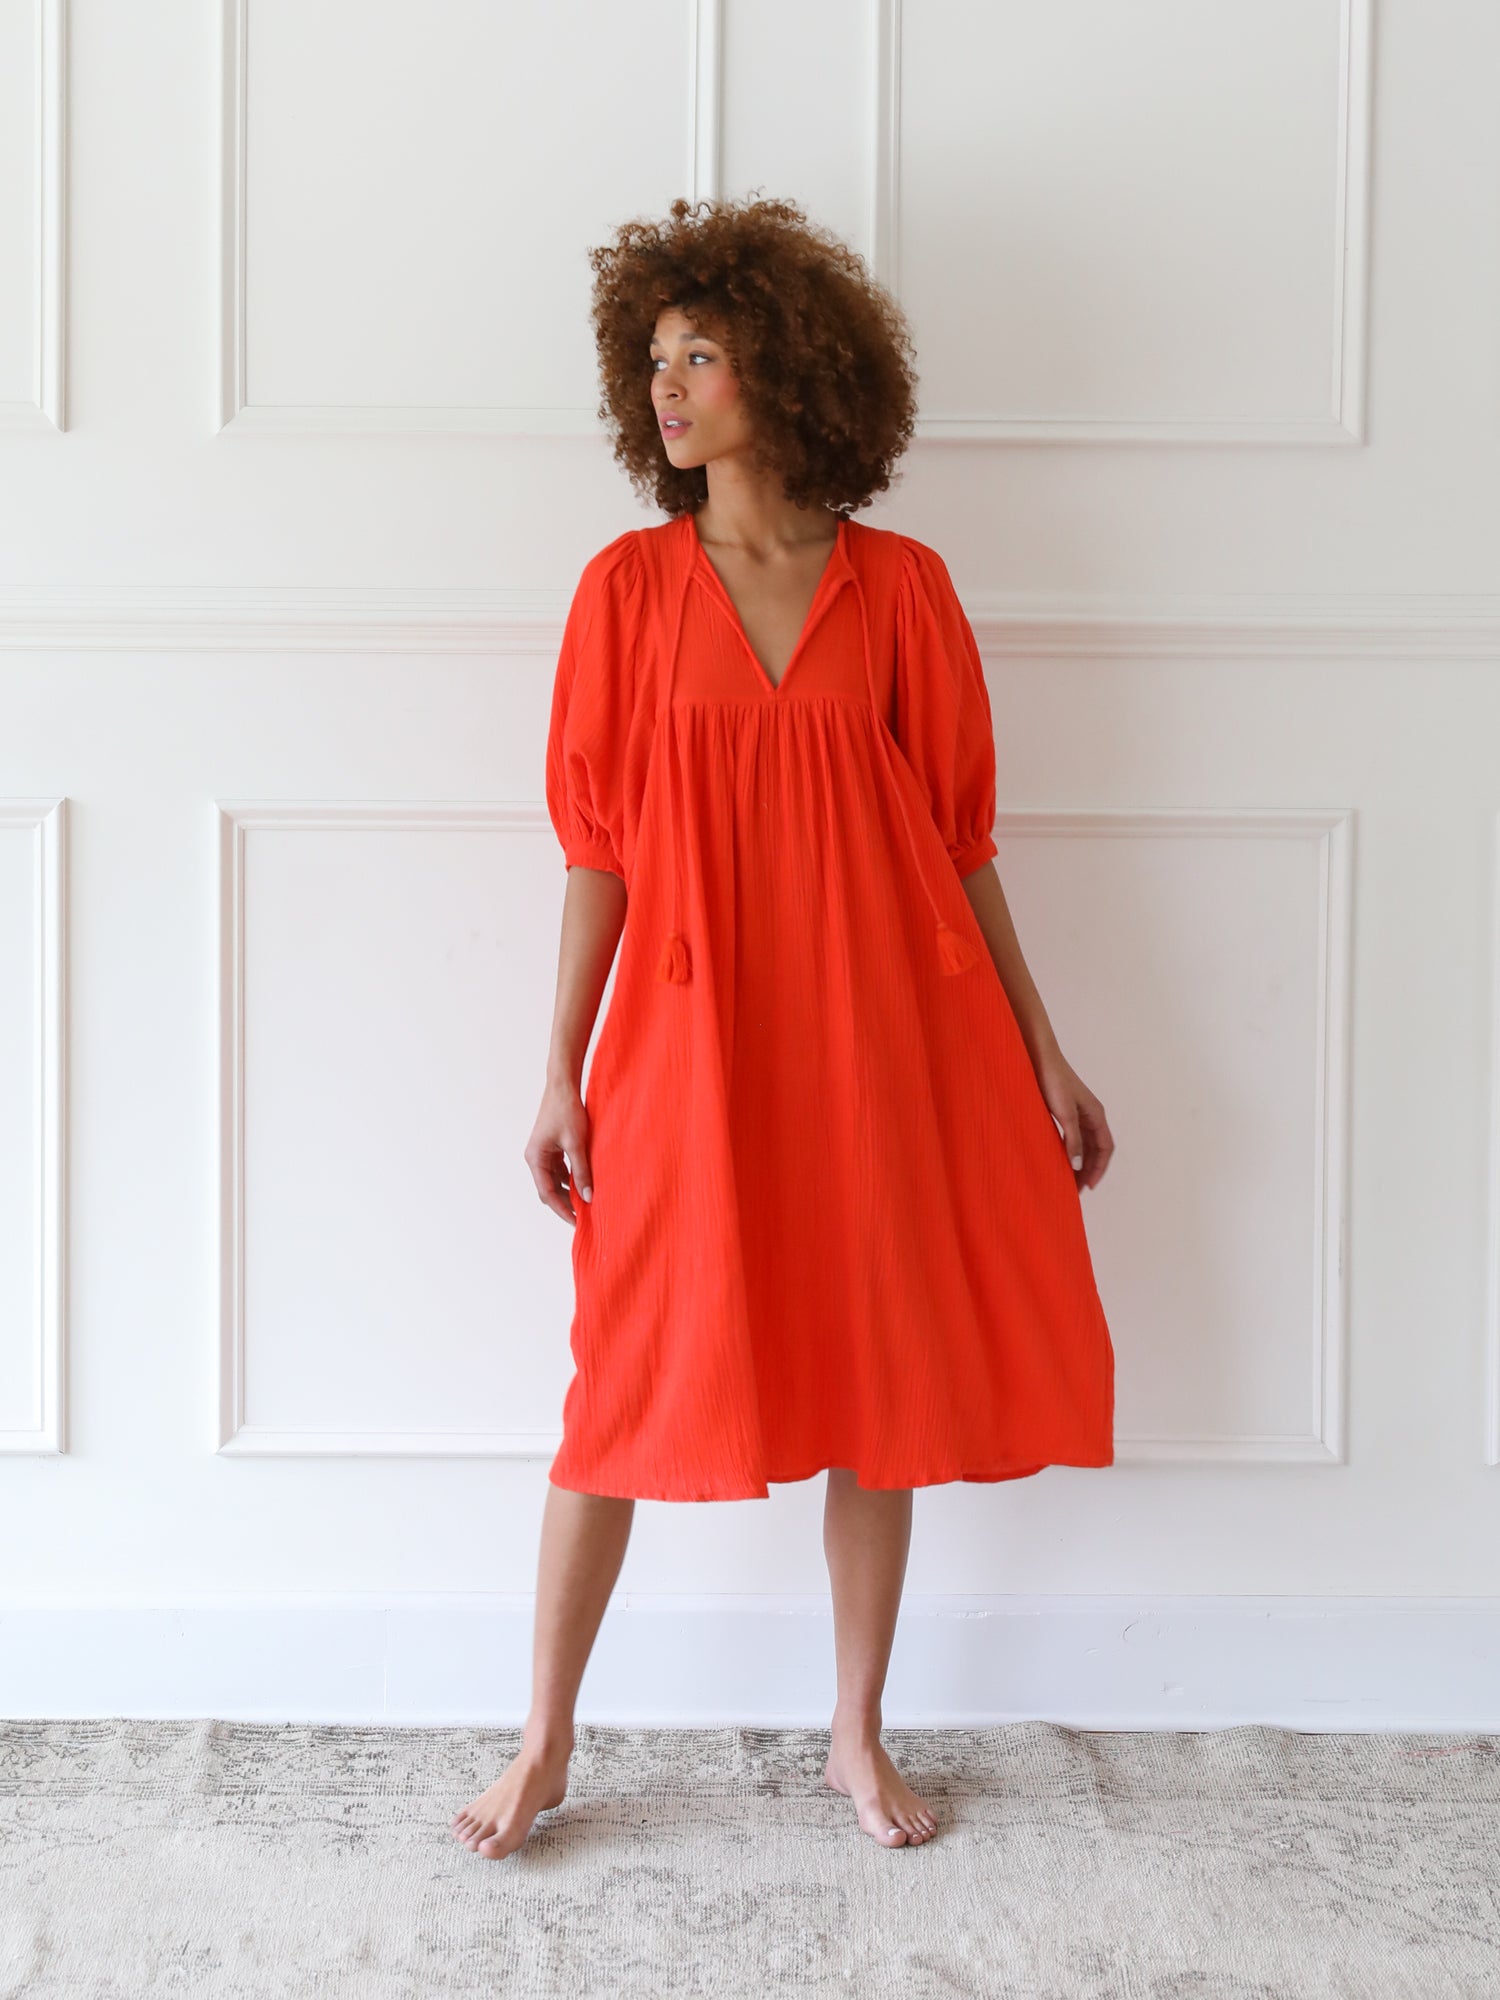 MILLE Clothing Saffron Dress in Poppy